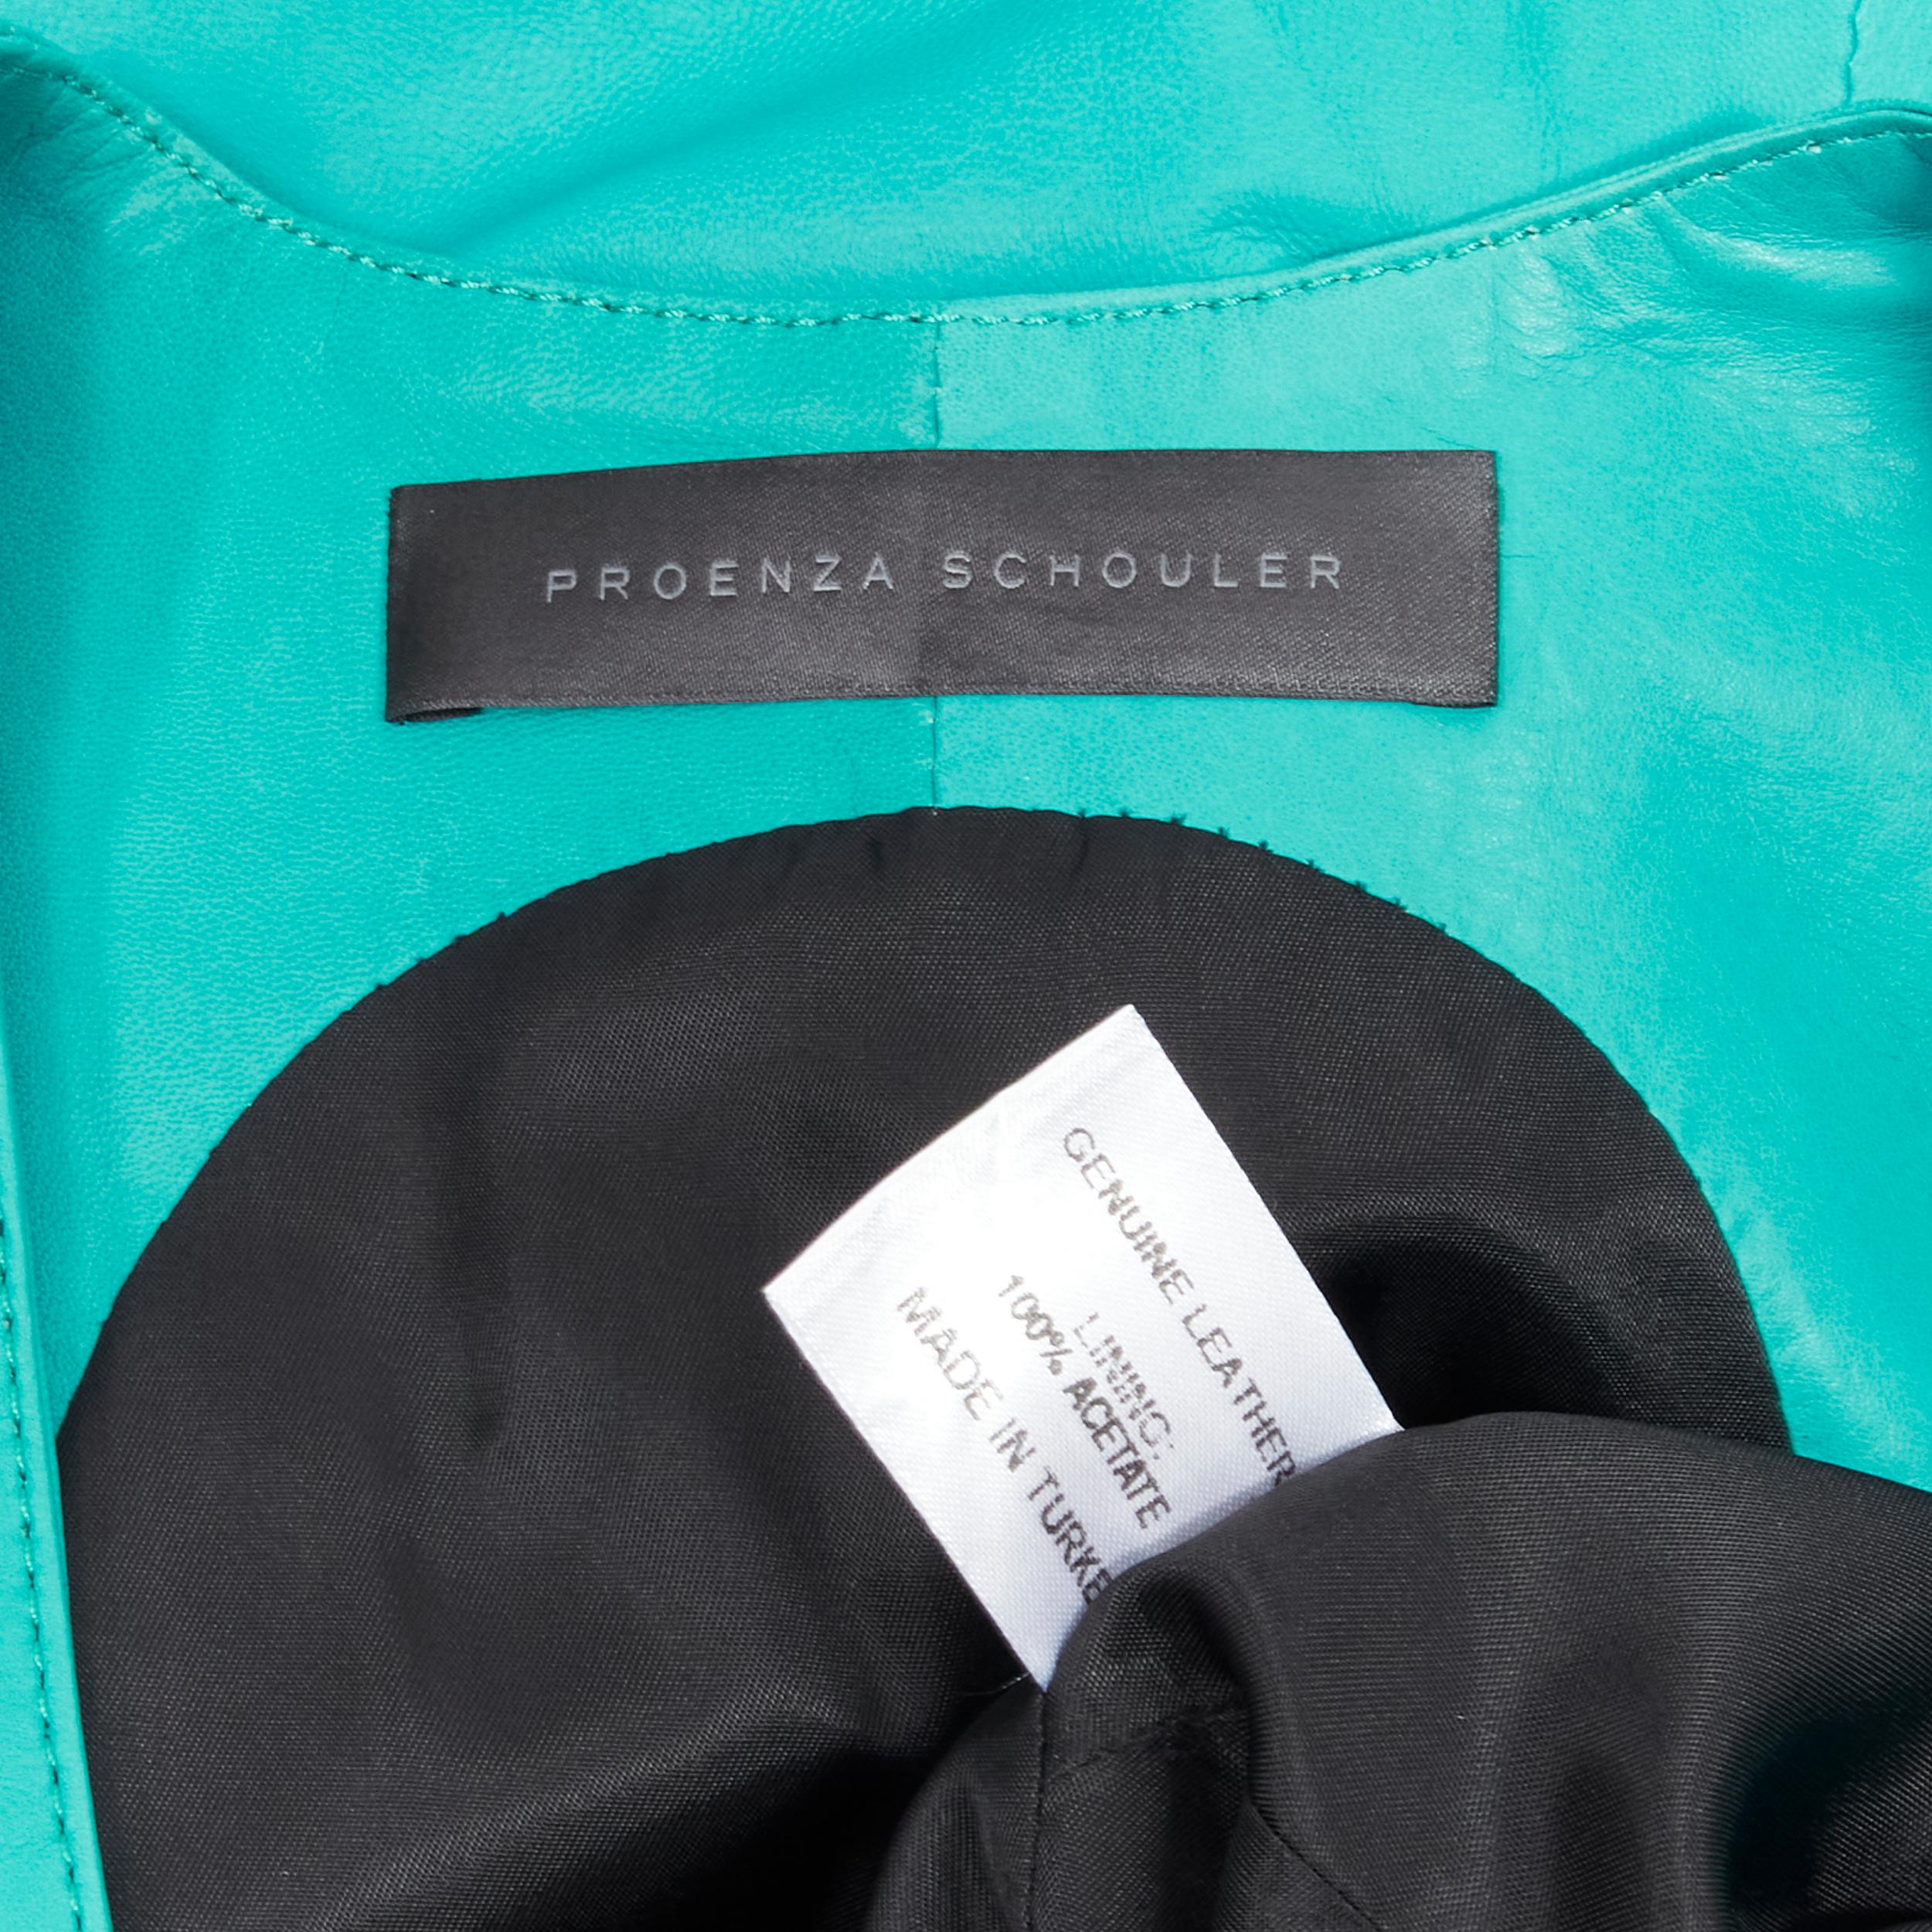 PROENZA SCHOULER runway teal blue leather ruffle trimmed sportif buckle dress  For Sale 2